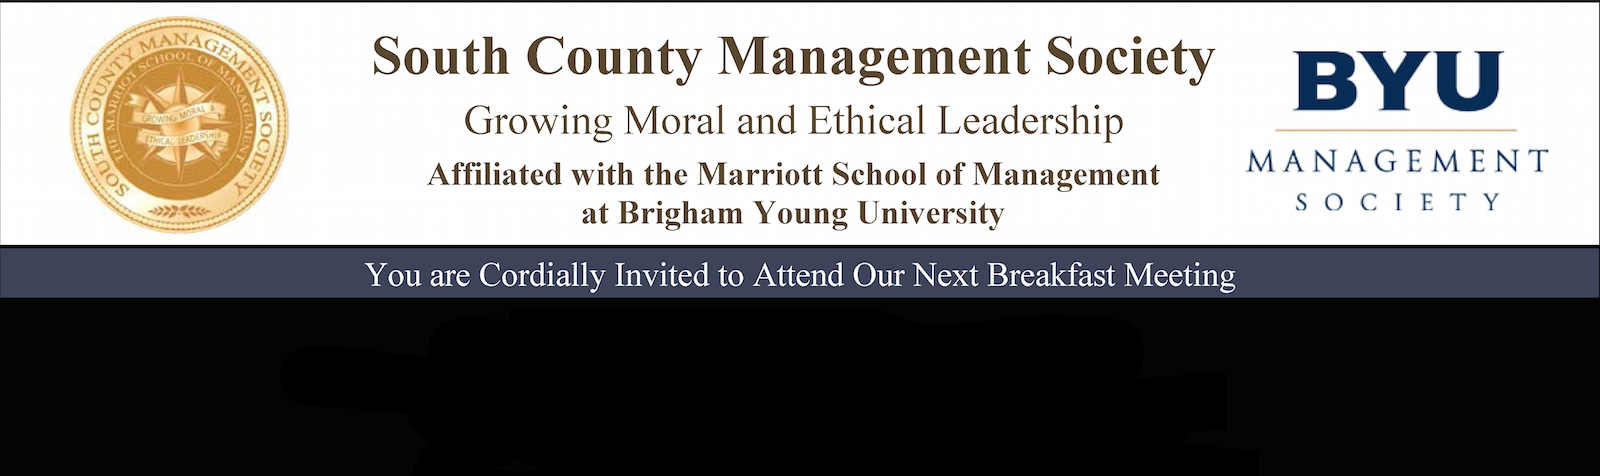 BYU Management Society - Orange County Chapter